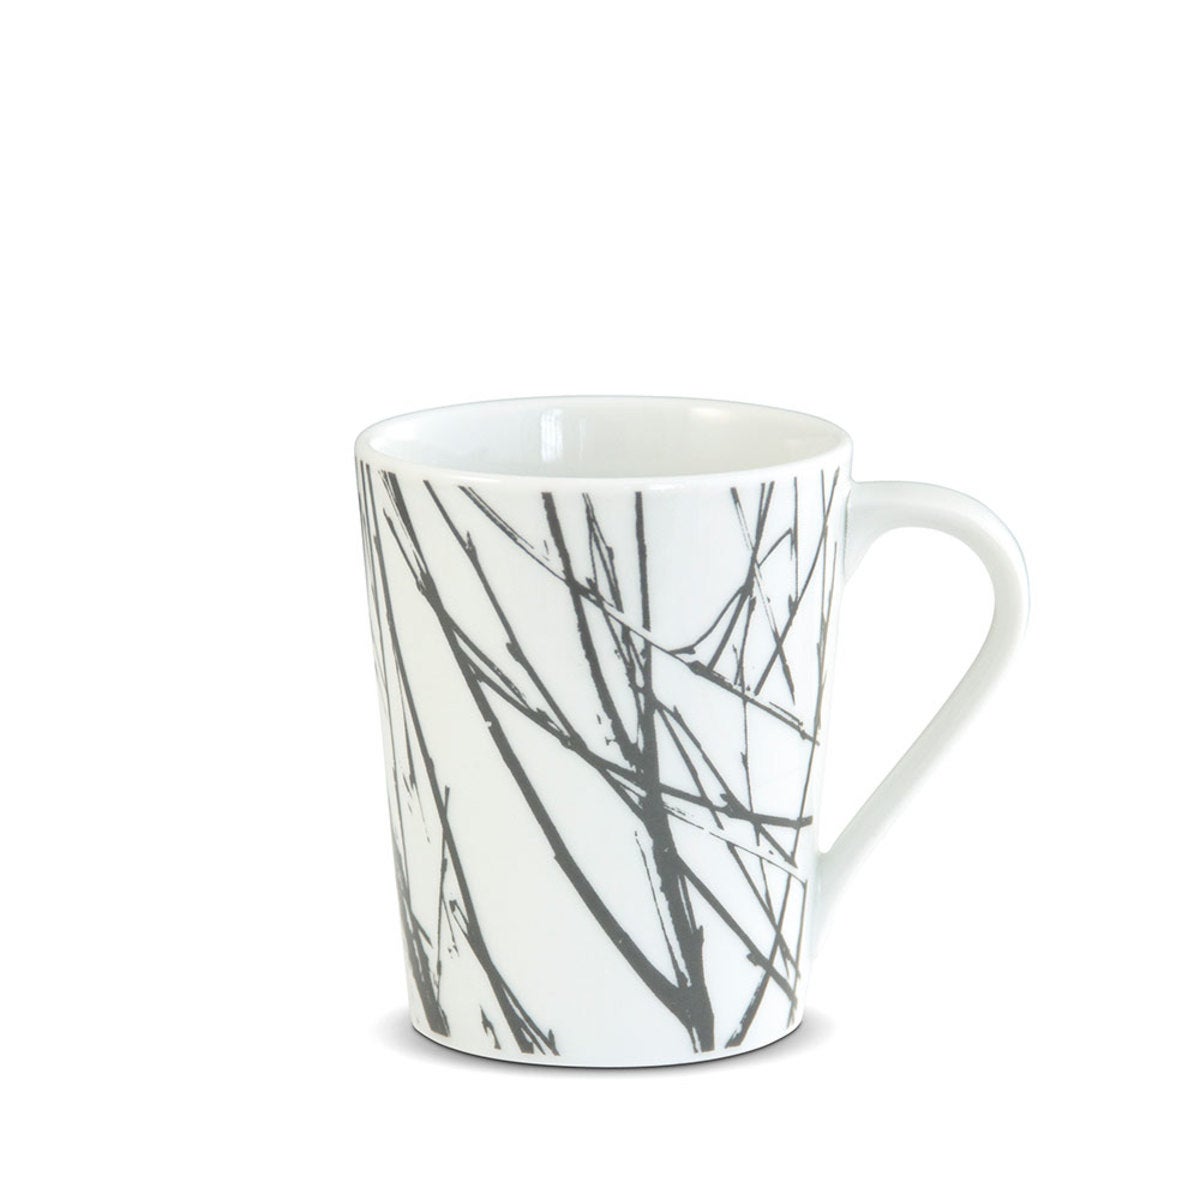 Twigg Porcelain Coffee Mug, Set of 4 - Green